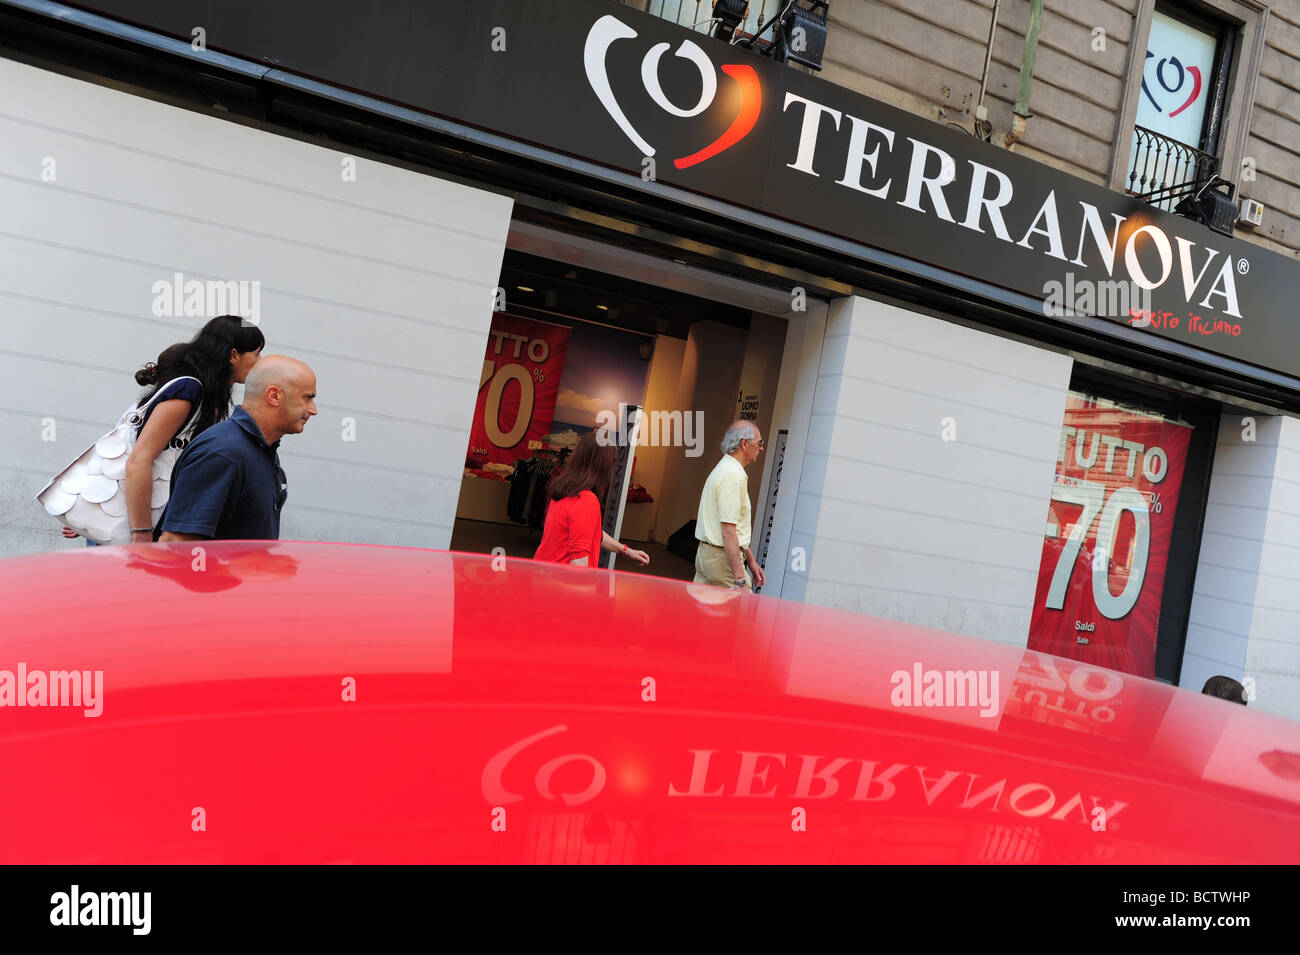 Europe Italy Milan Shopping on Corso Buenos Aires clothing storeTerranova Stock Photo